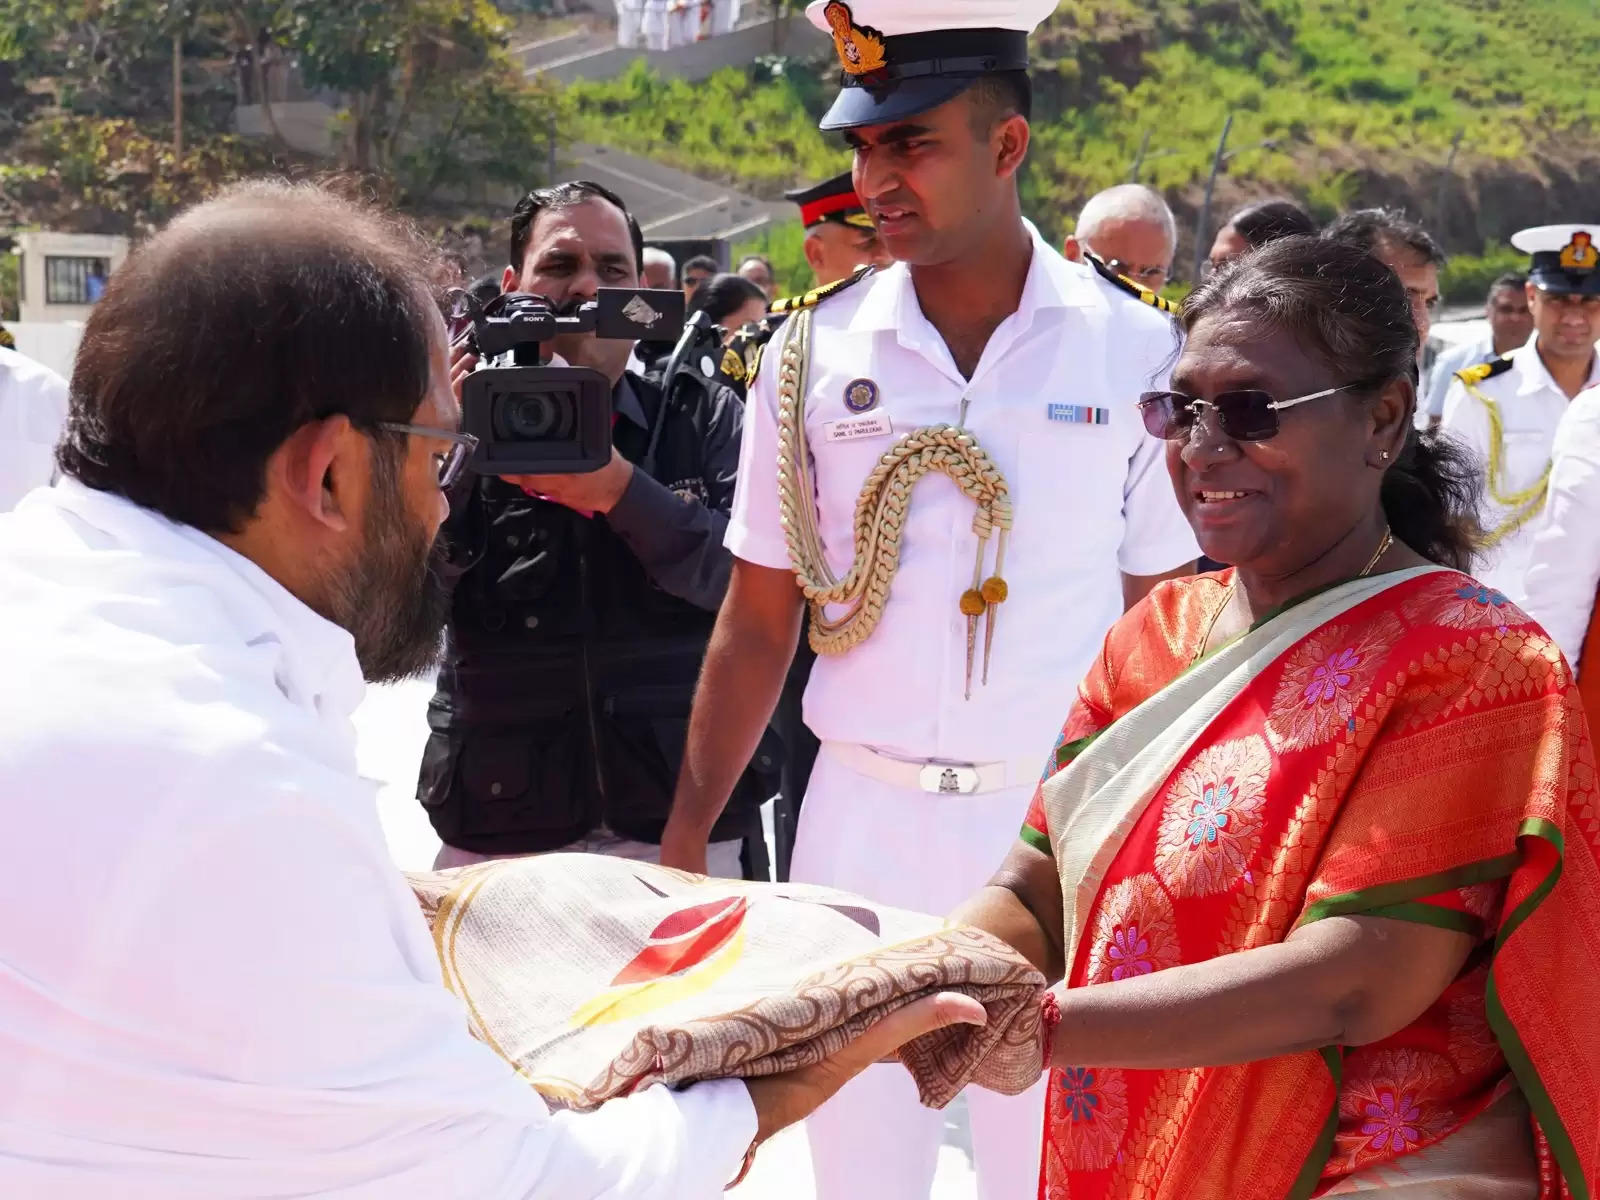 एक महान आध्यात्मिक परंपरा को आगे बढ़ा रहा श्रीमद् राजचंद्र मिशन : राष्ट्रपति